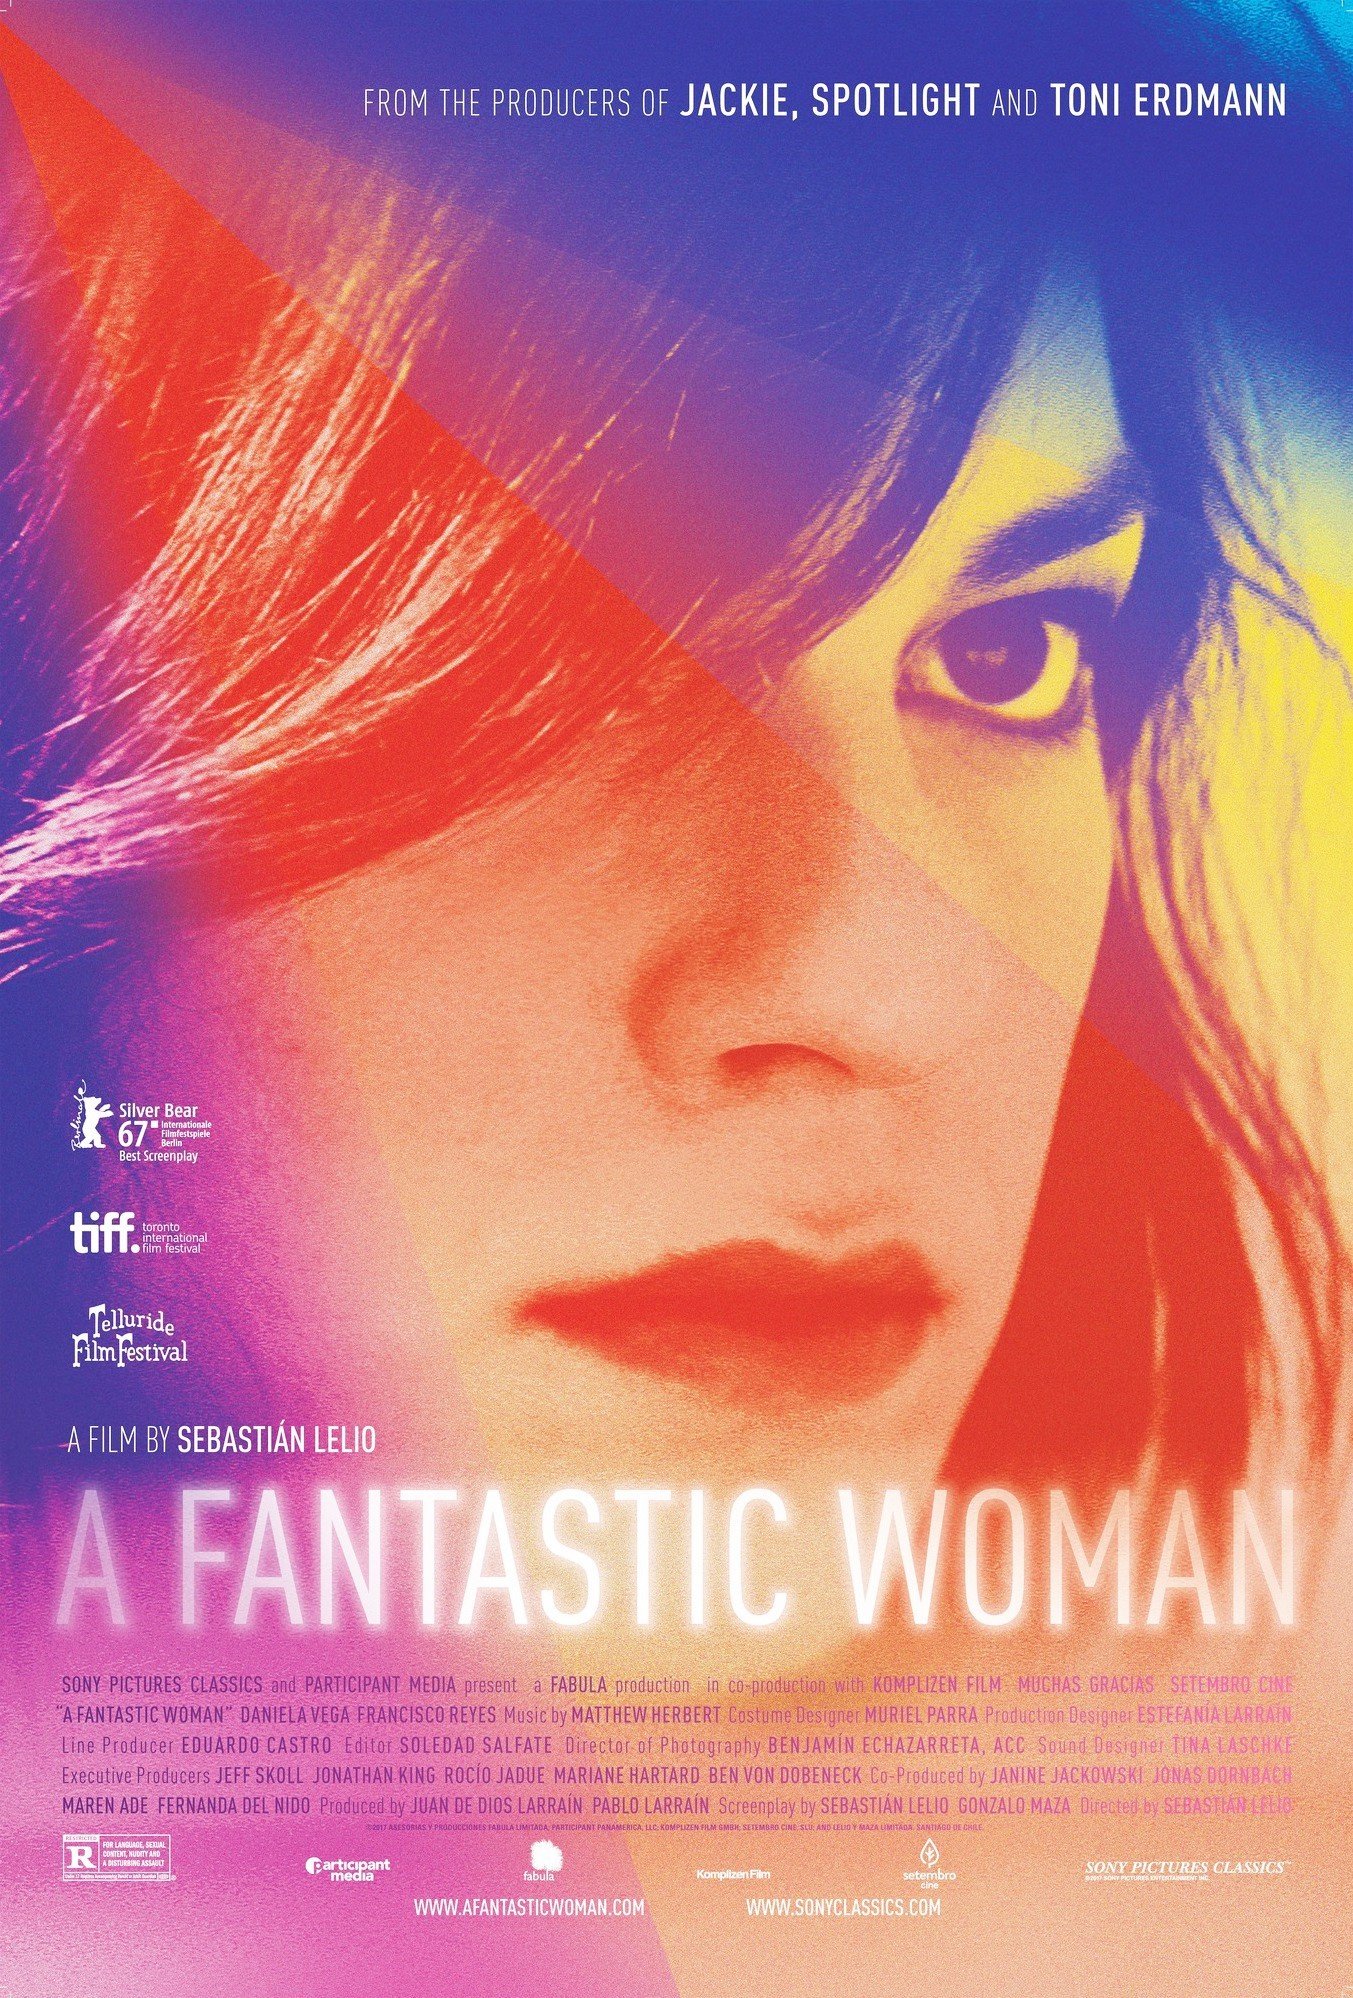 Nonton film A Fantastic Woman layarkaca21 indoxx1 ganool online streaming terbaru